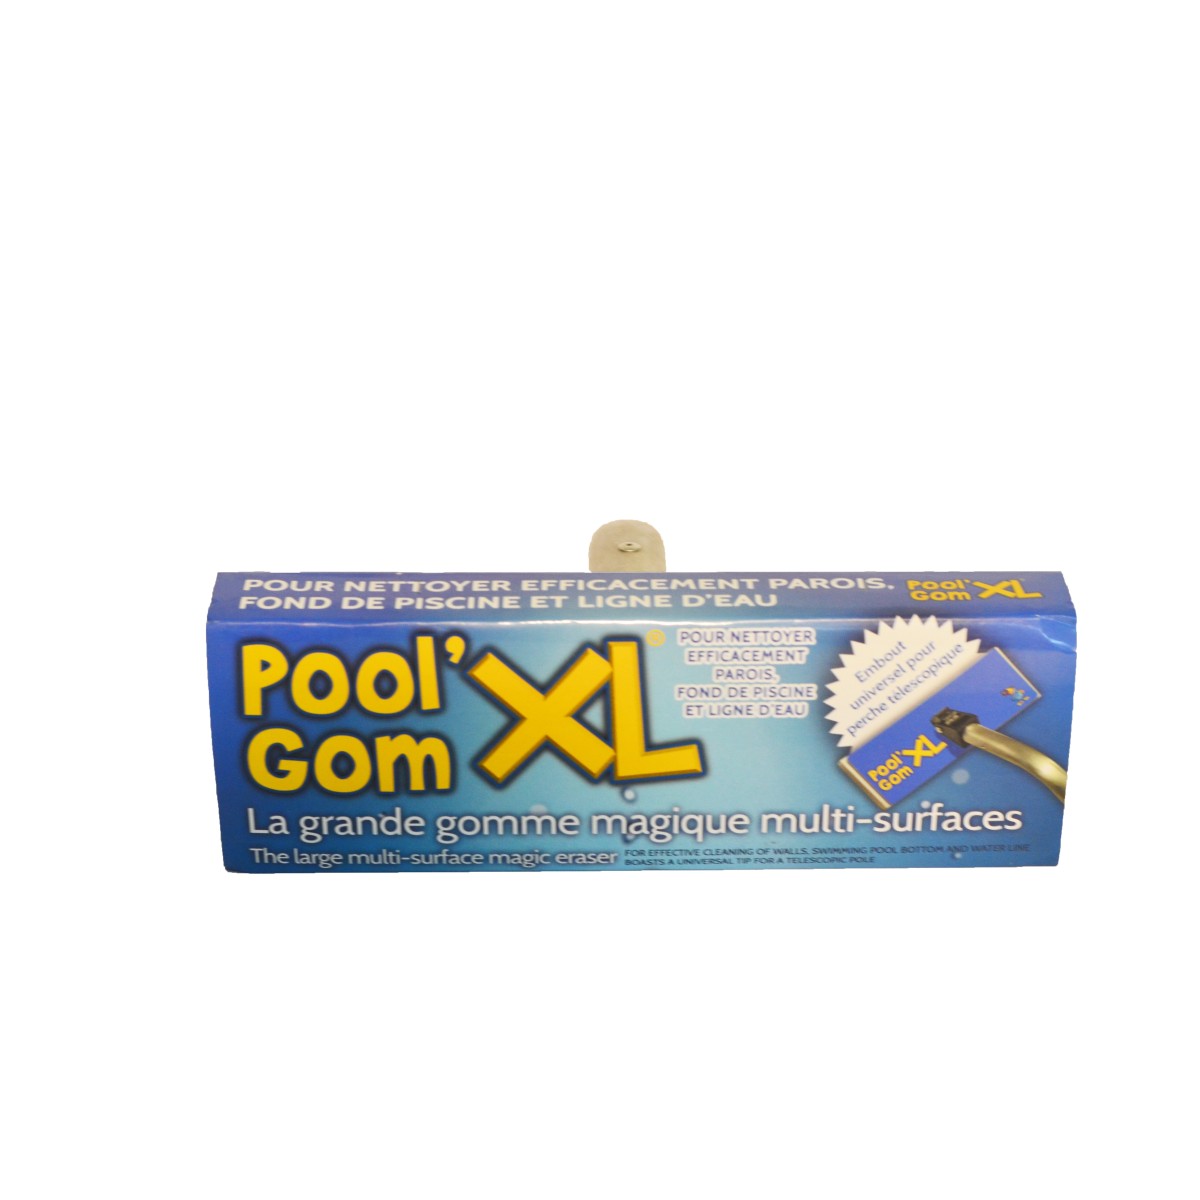 Pool Gom XL - Gomma pulitrice multi superficie per piscine